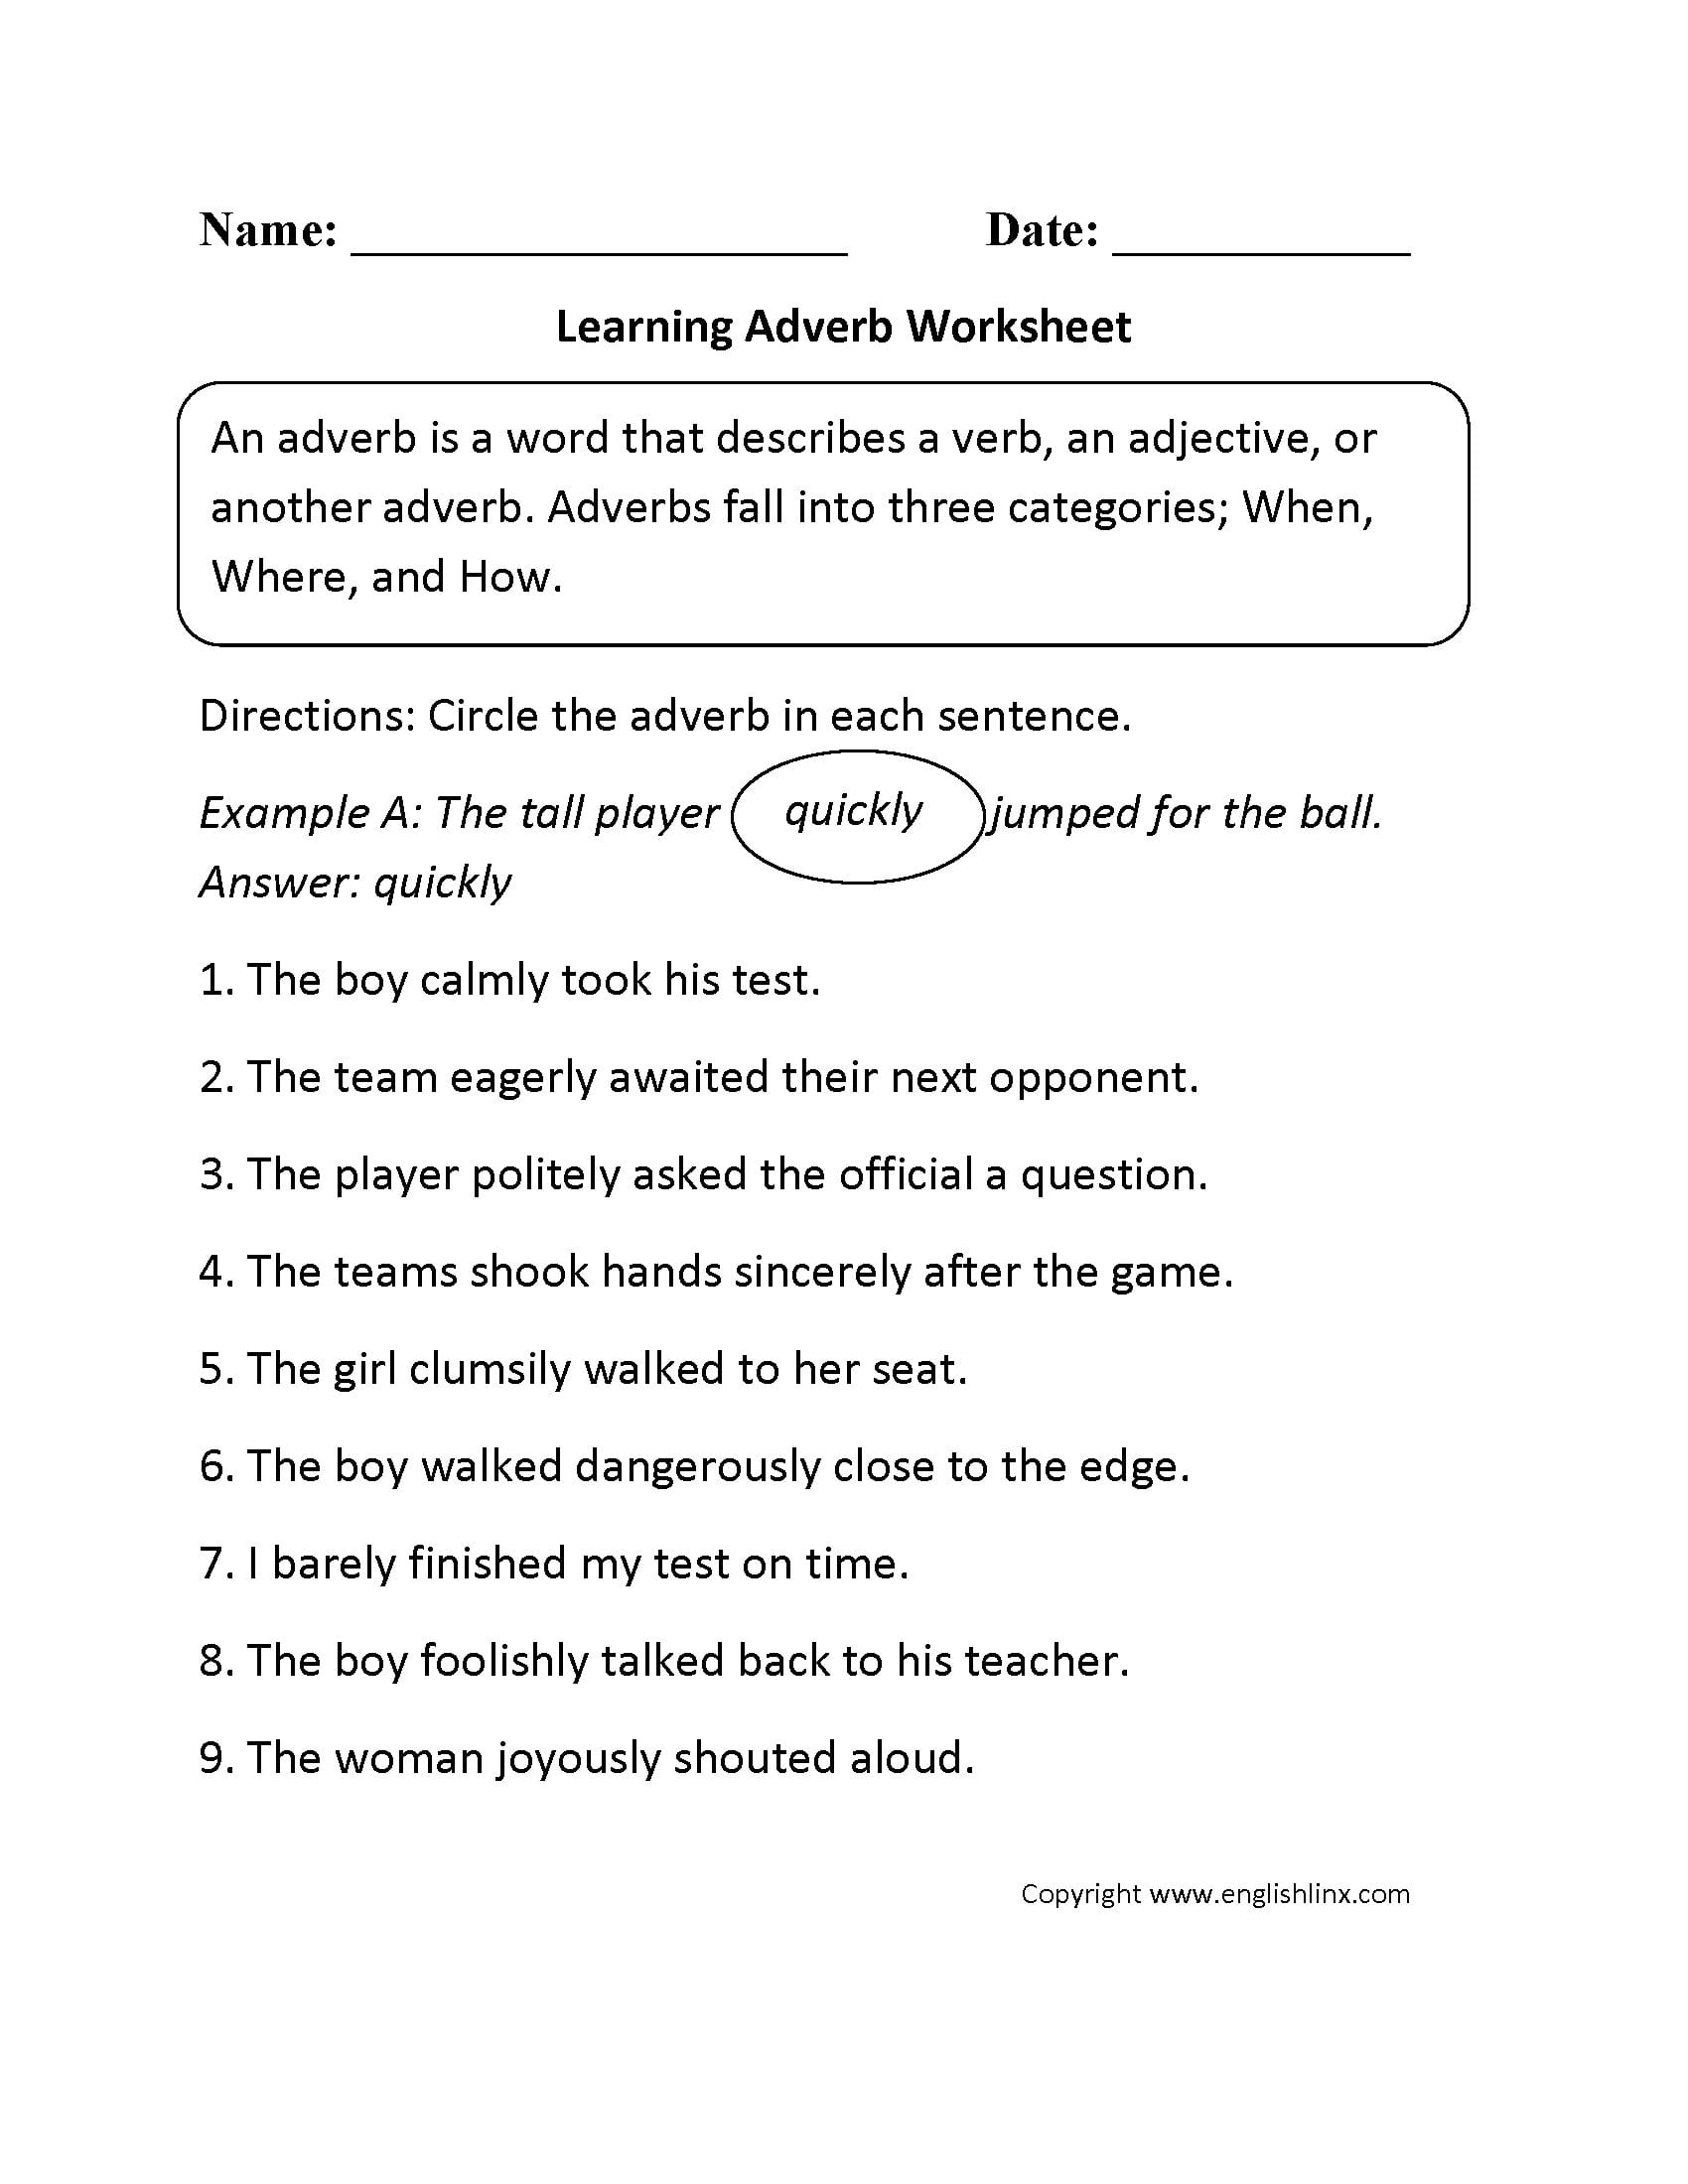 adverbs-worksheet-3rd-grade-pdf-driverlayer-search-engine